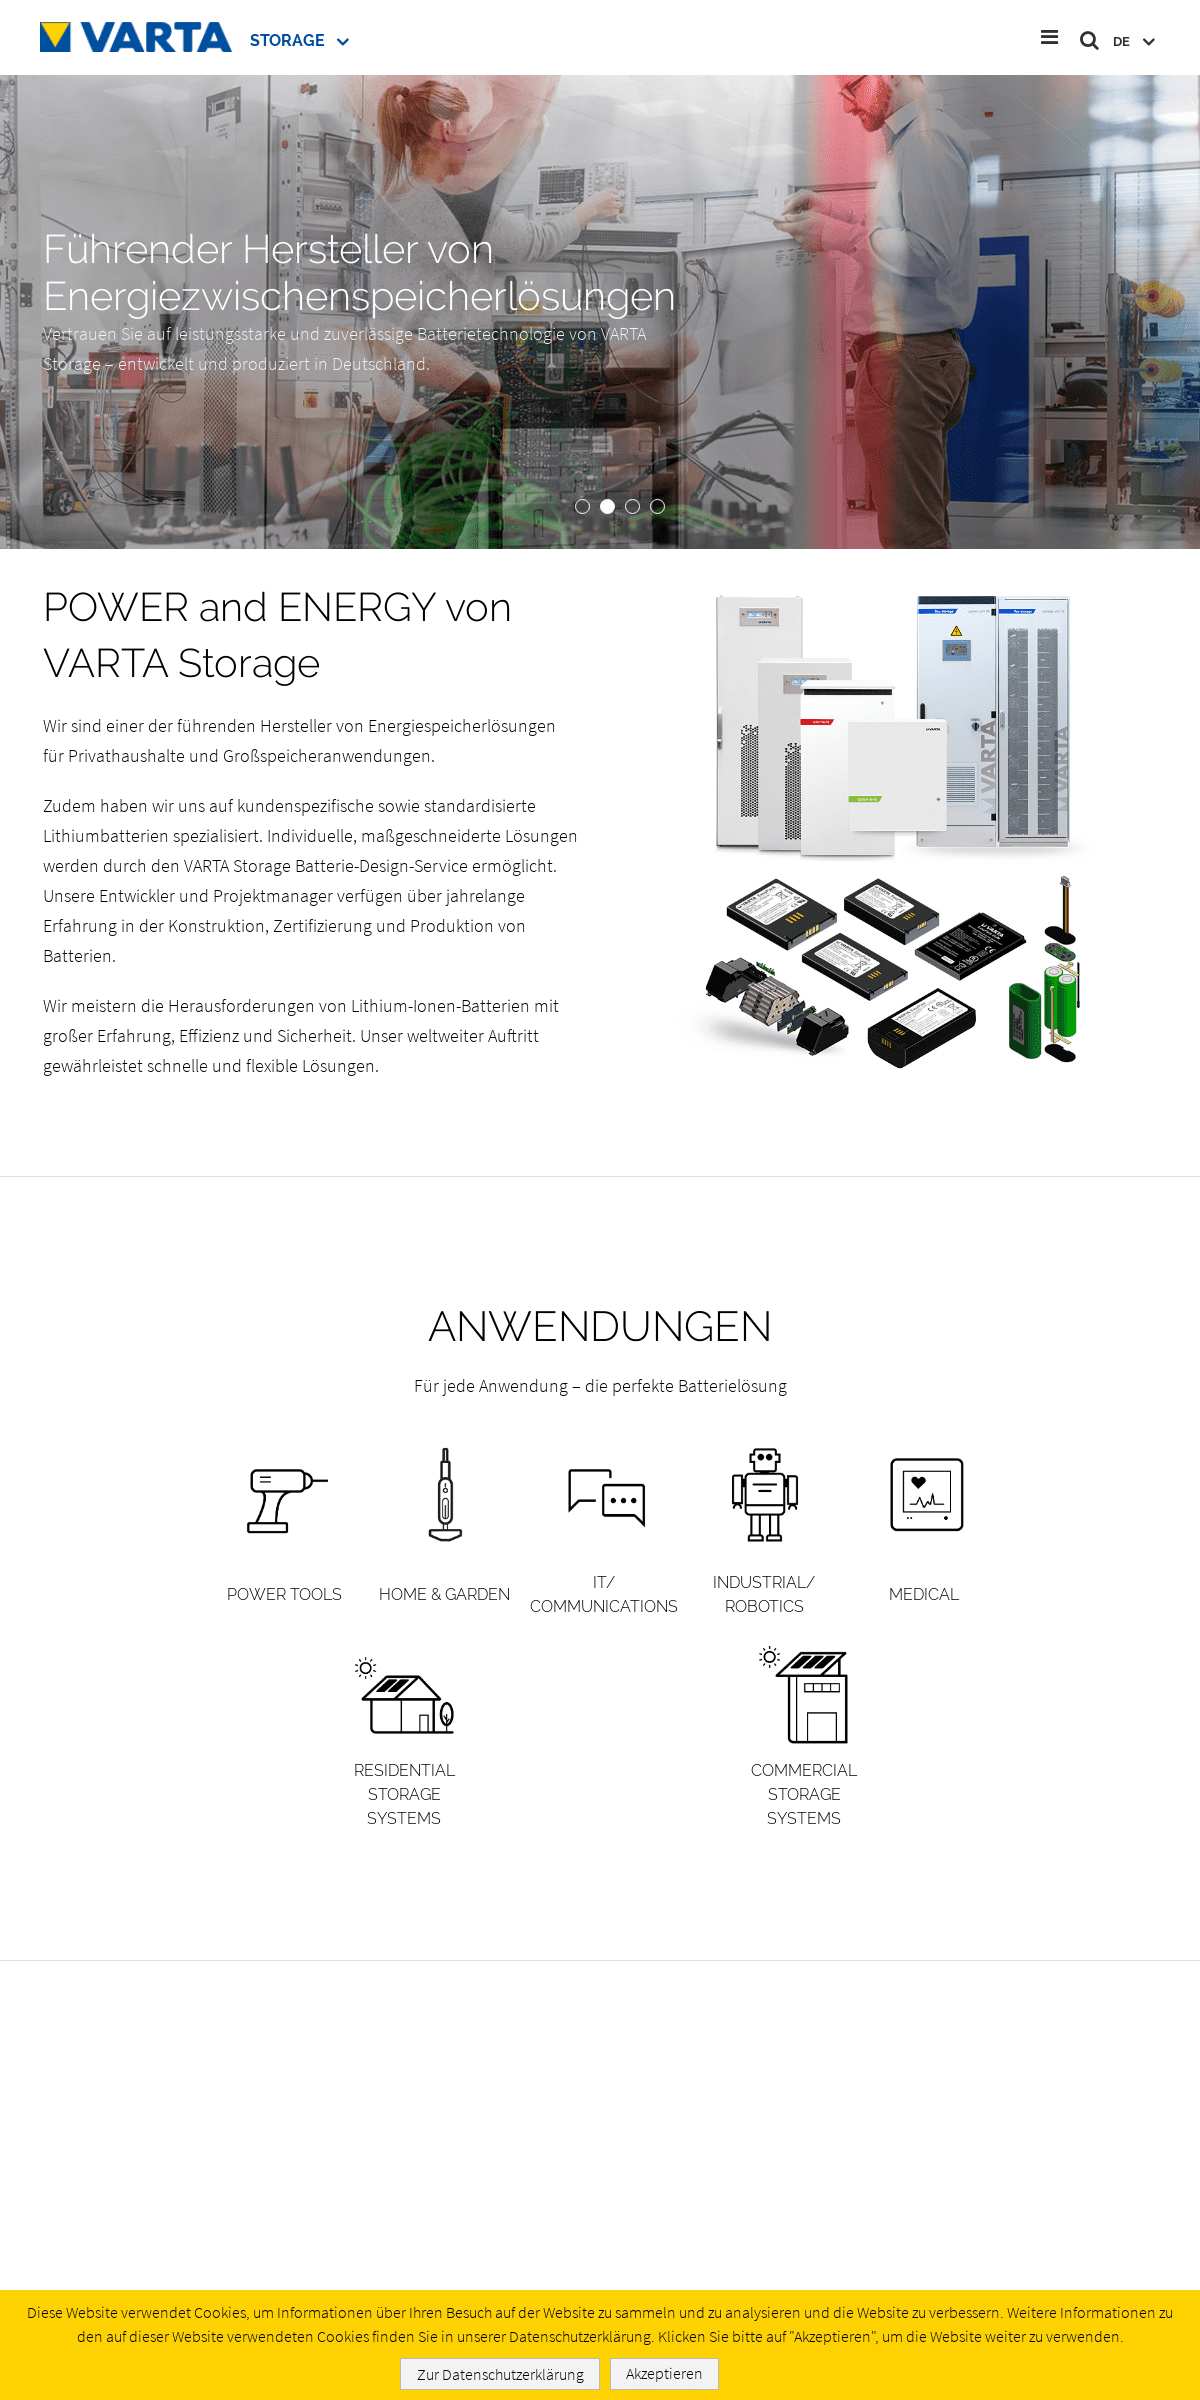 A complete backup of varta-storage.com